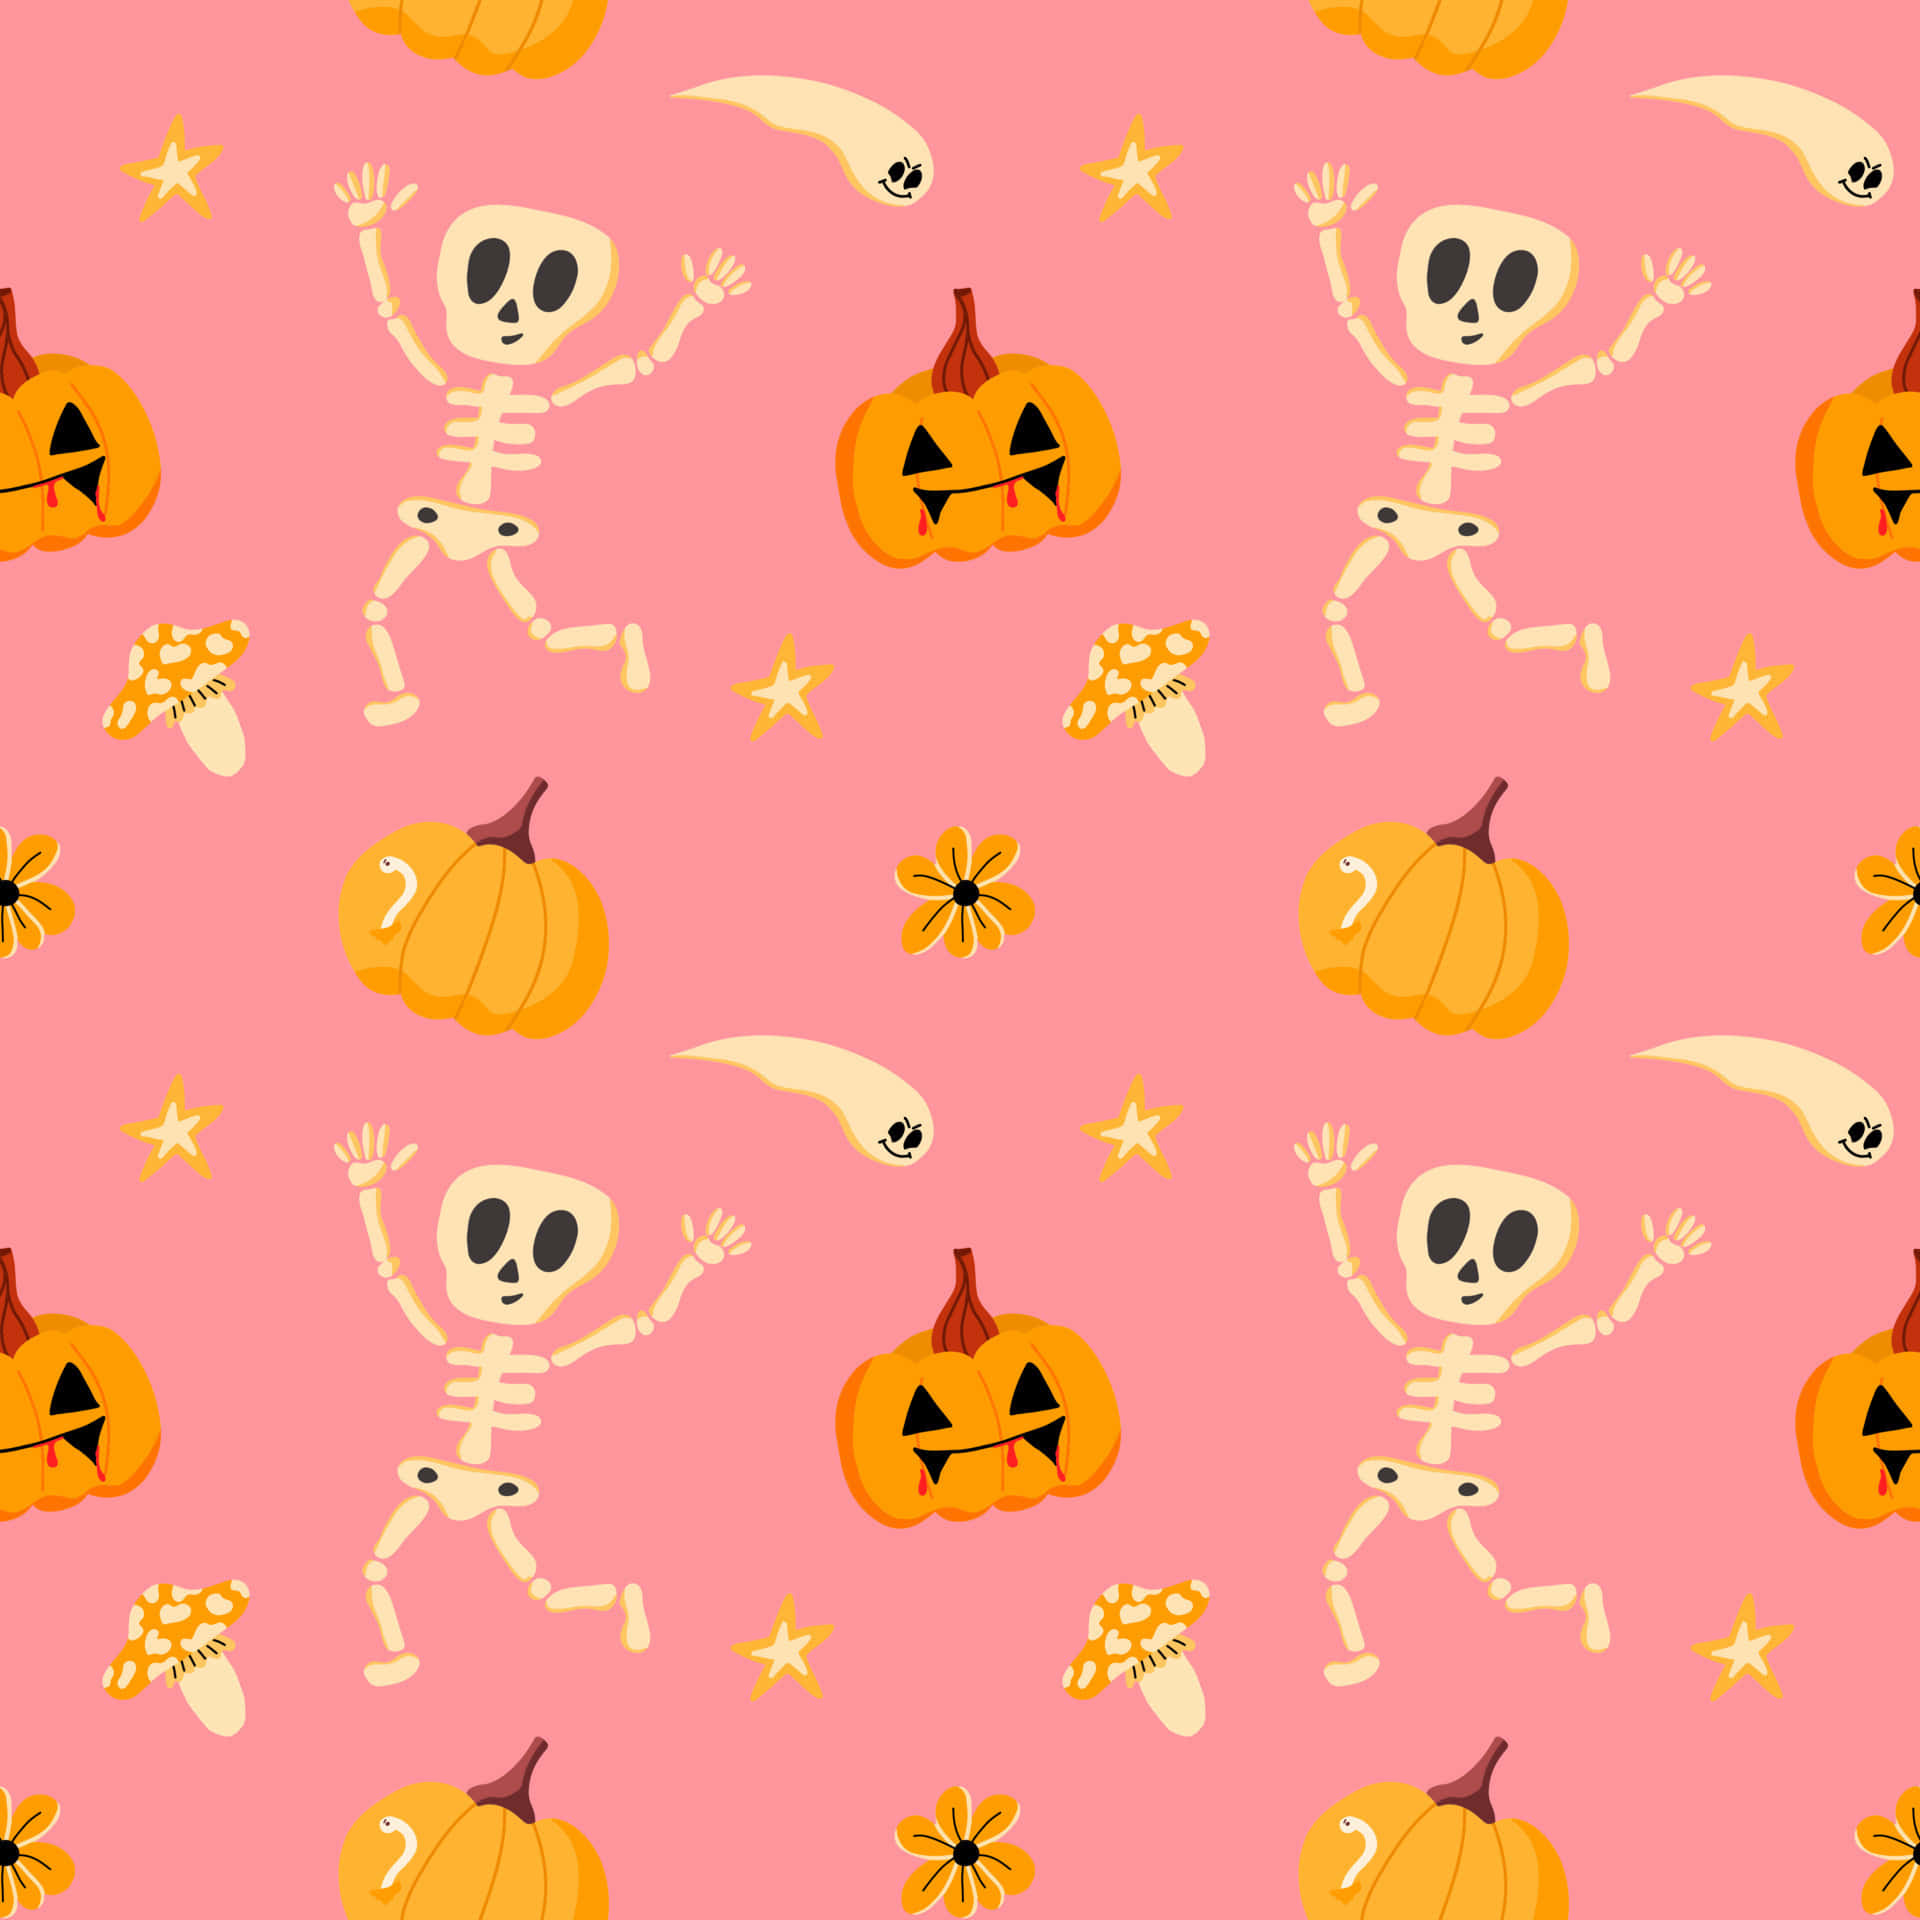 Skeletons And Pumpkins On A Pink Background